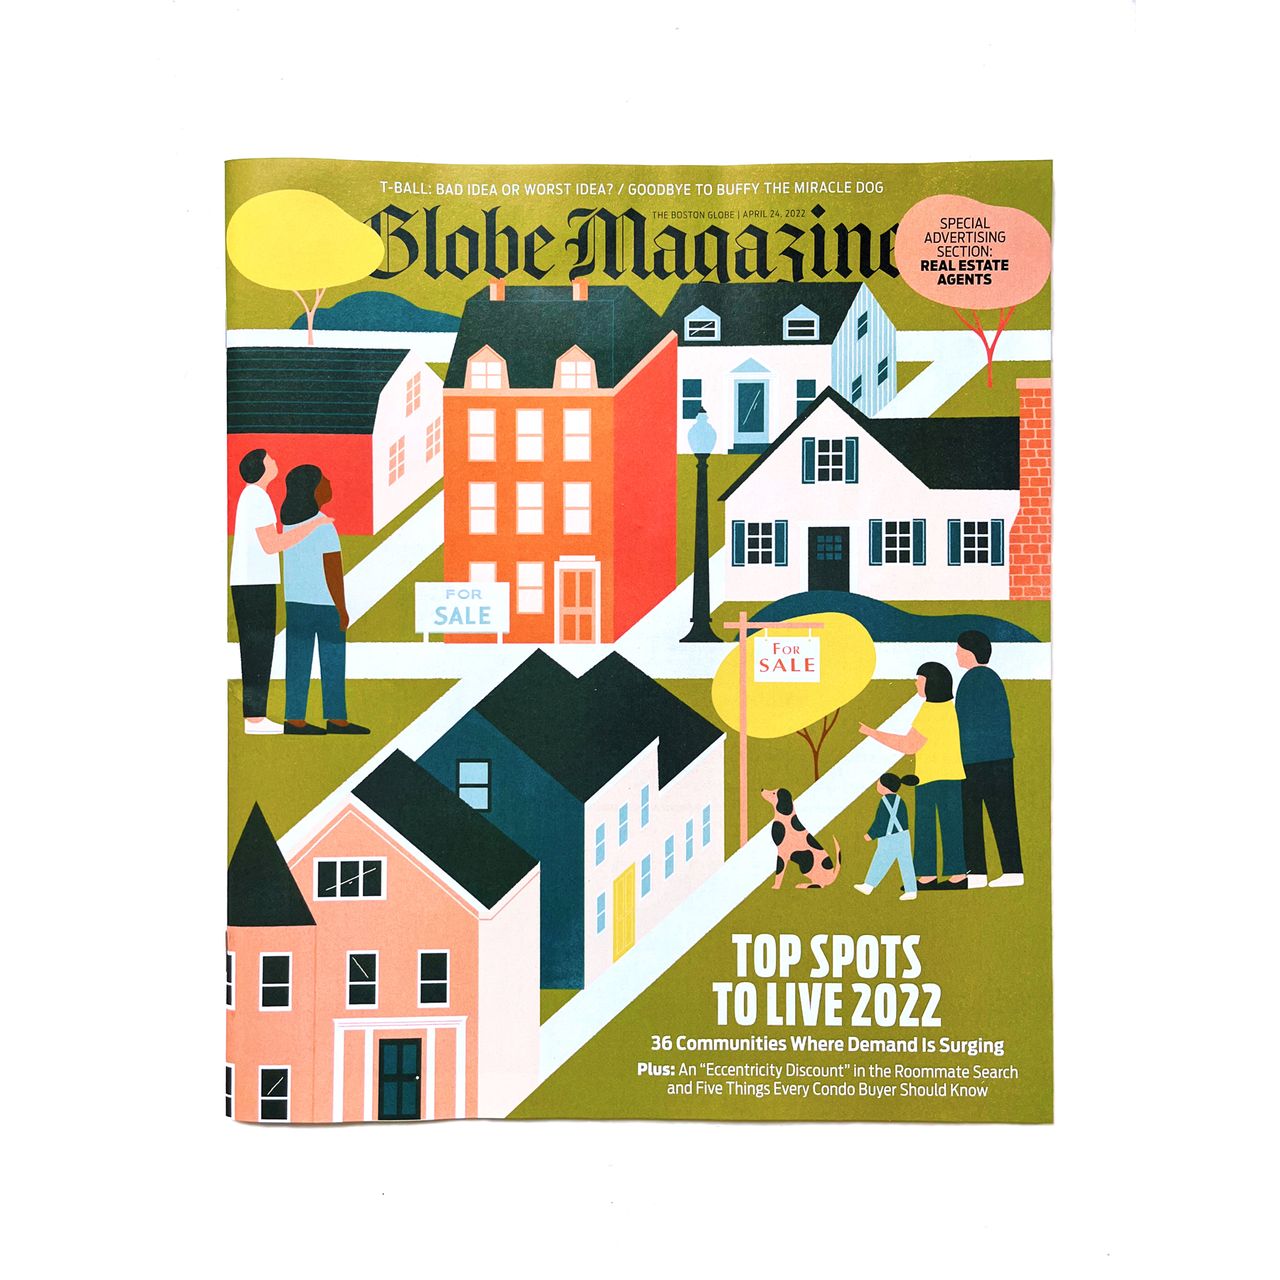 Cover illustration for Boston Globe magazine, Top Spots to Live